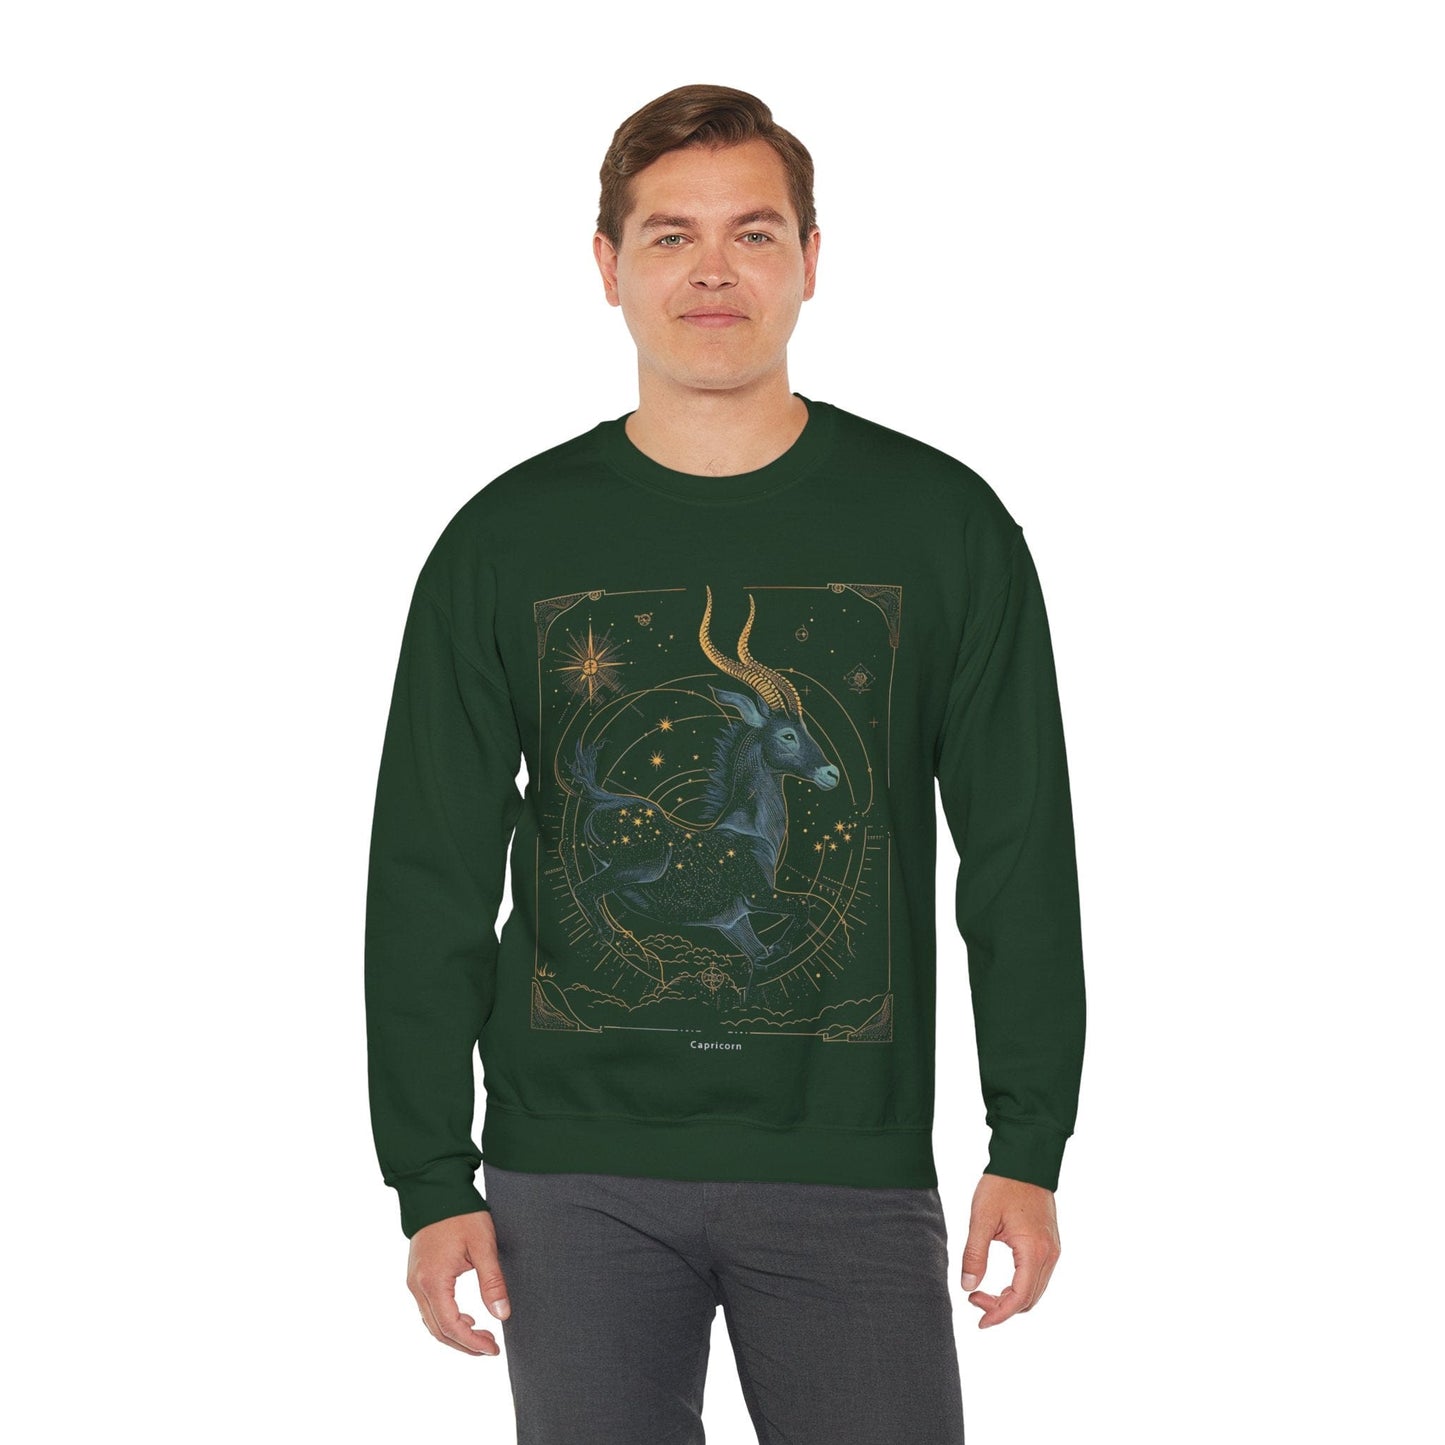 Sweatshirt Capricorn Celestial Journey Sweatshirt: Stargaze in Comfort and Style